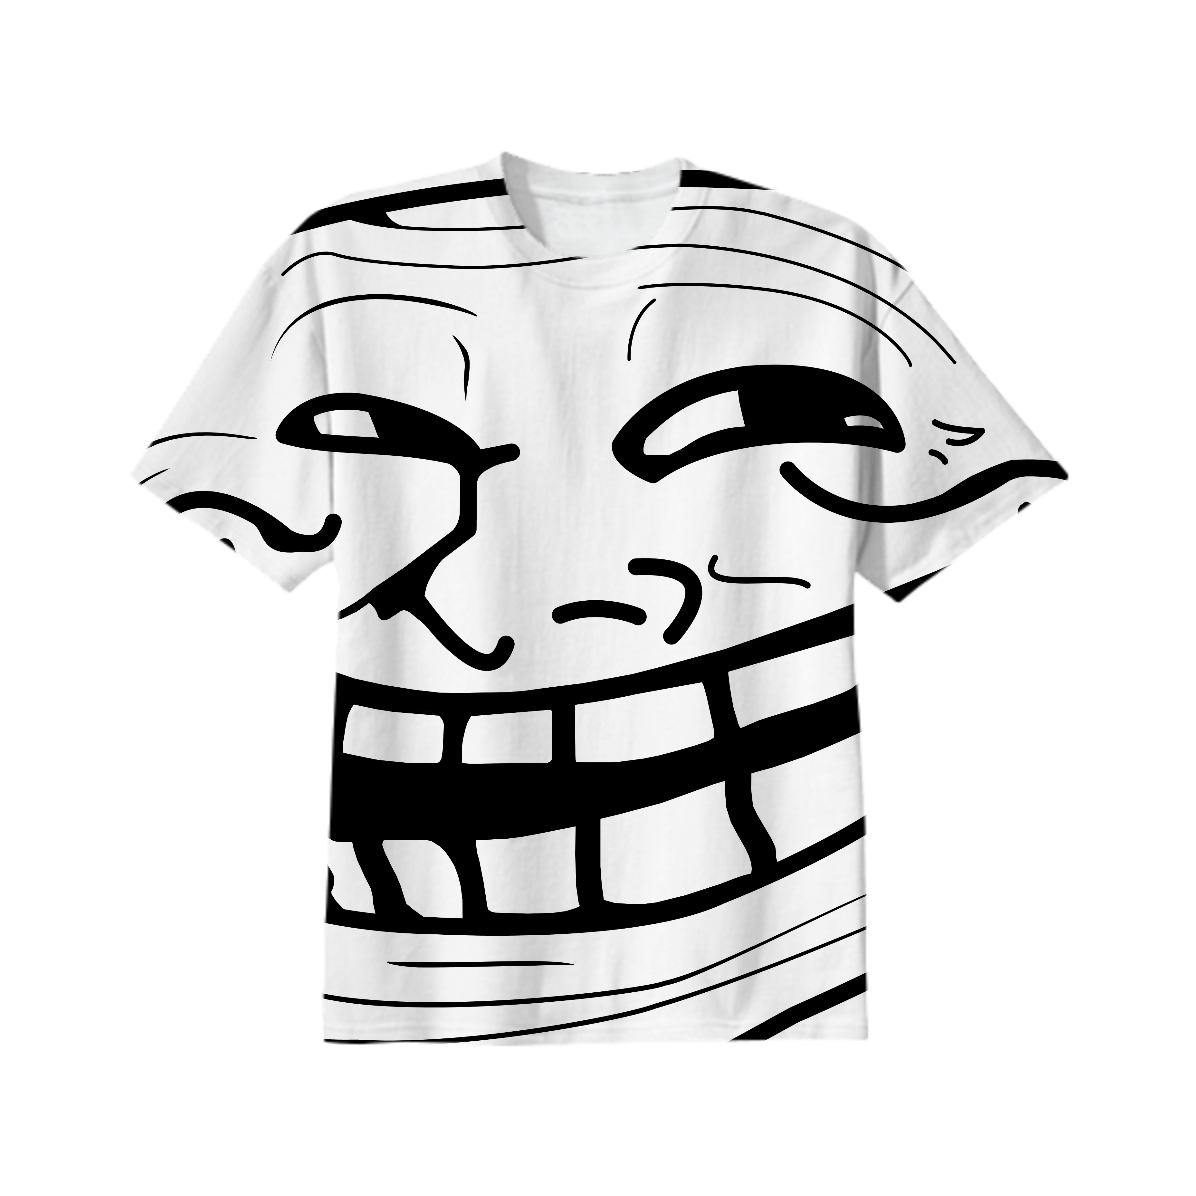 Shop MEME TROLL FACE FULL SHIRT Cotton T Shirt By Sawine Print All